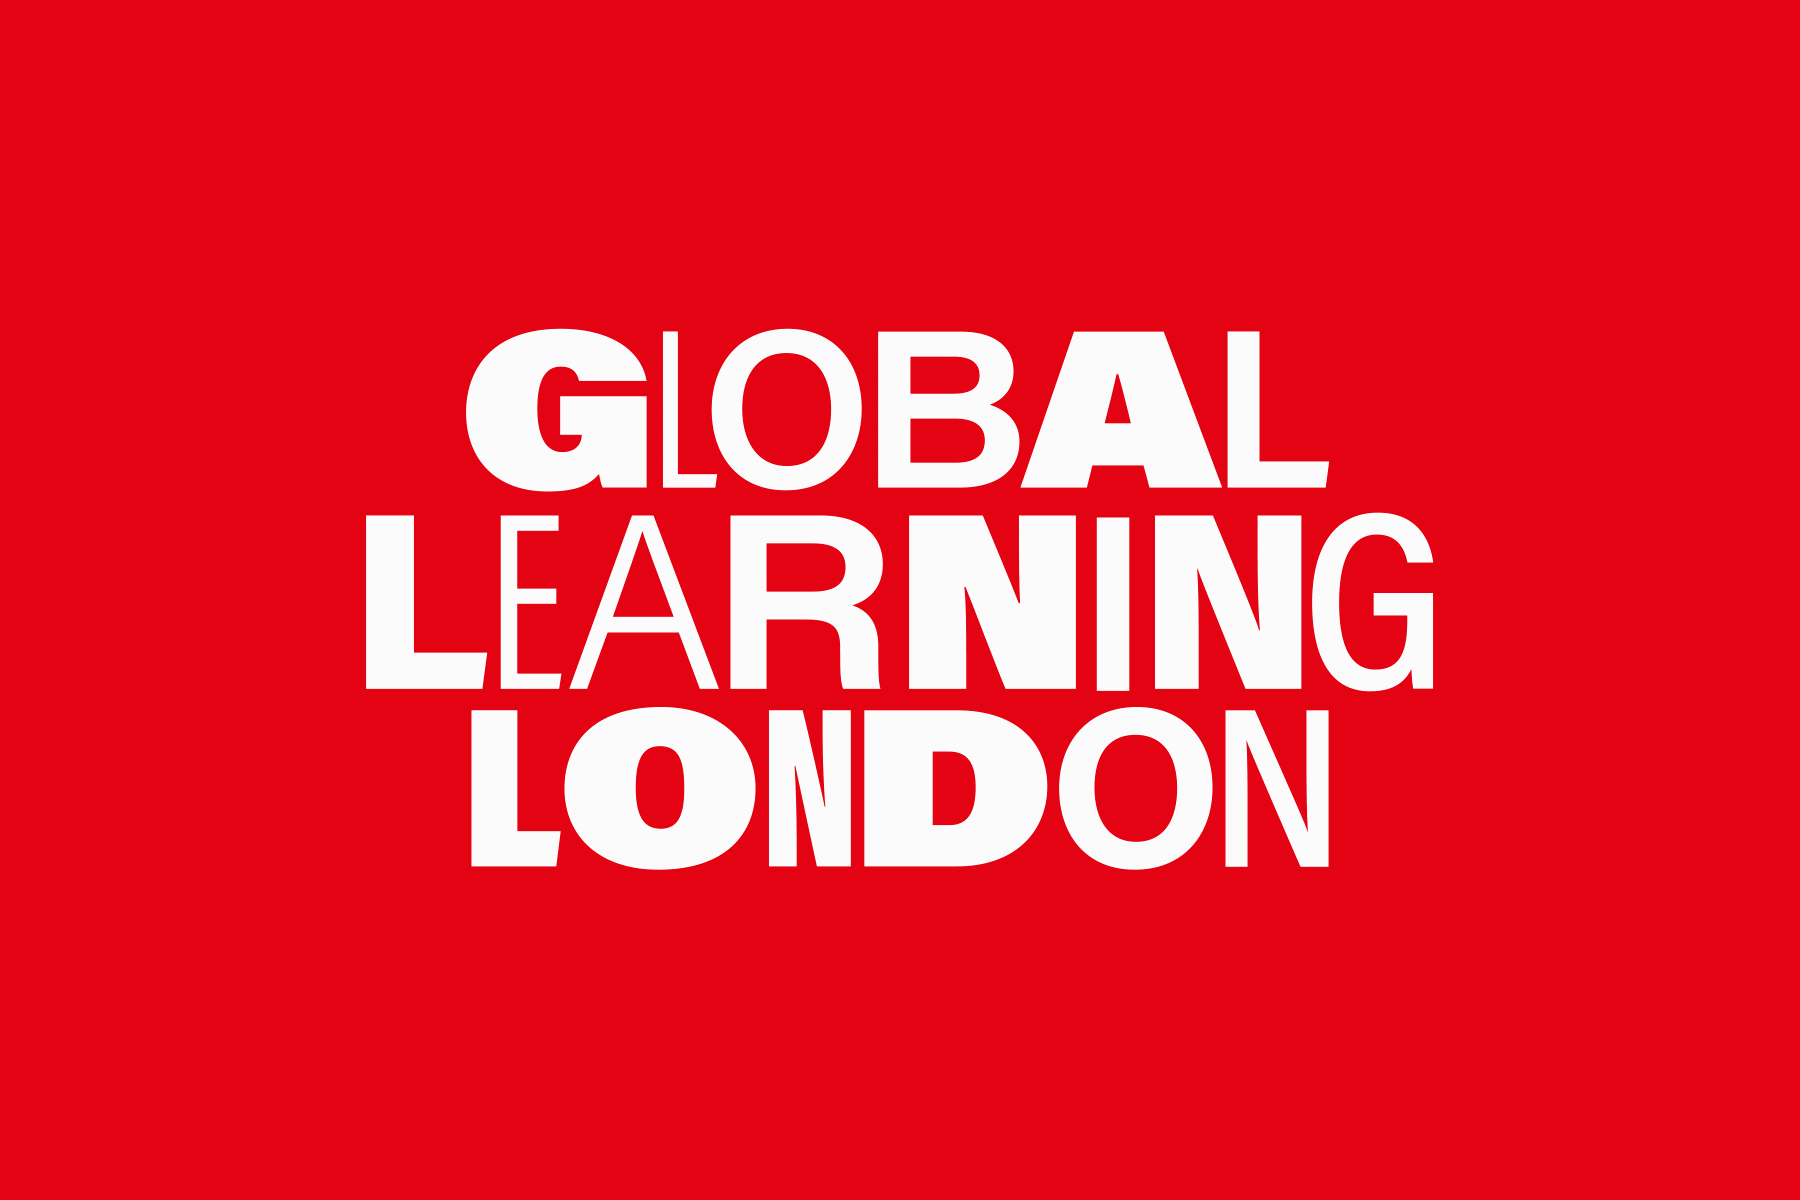 Global learning london logo animation